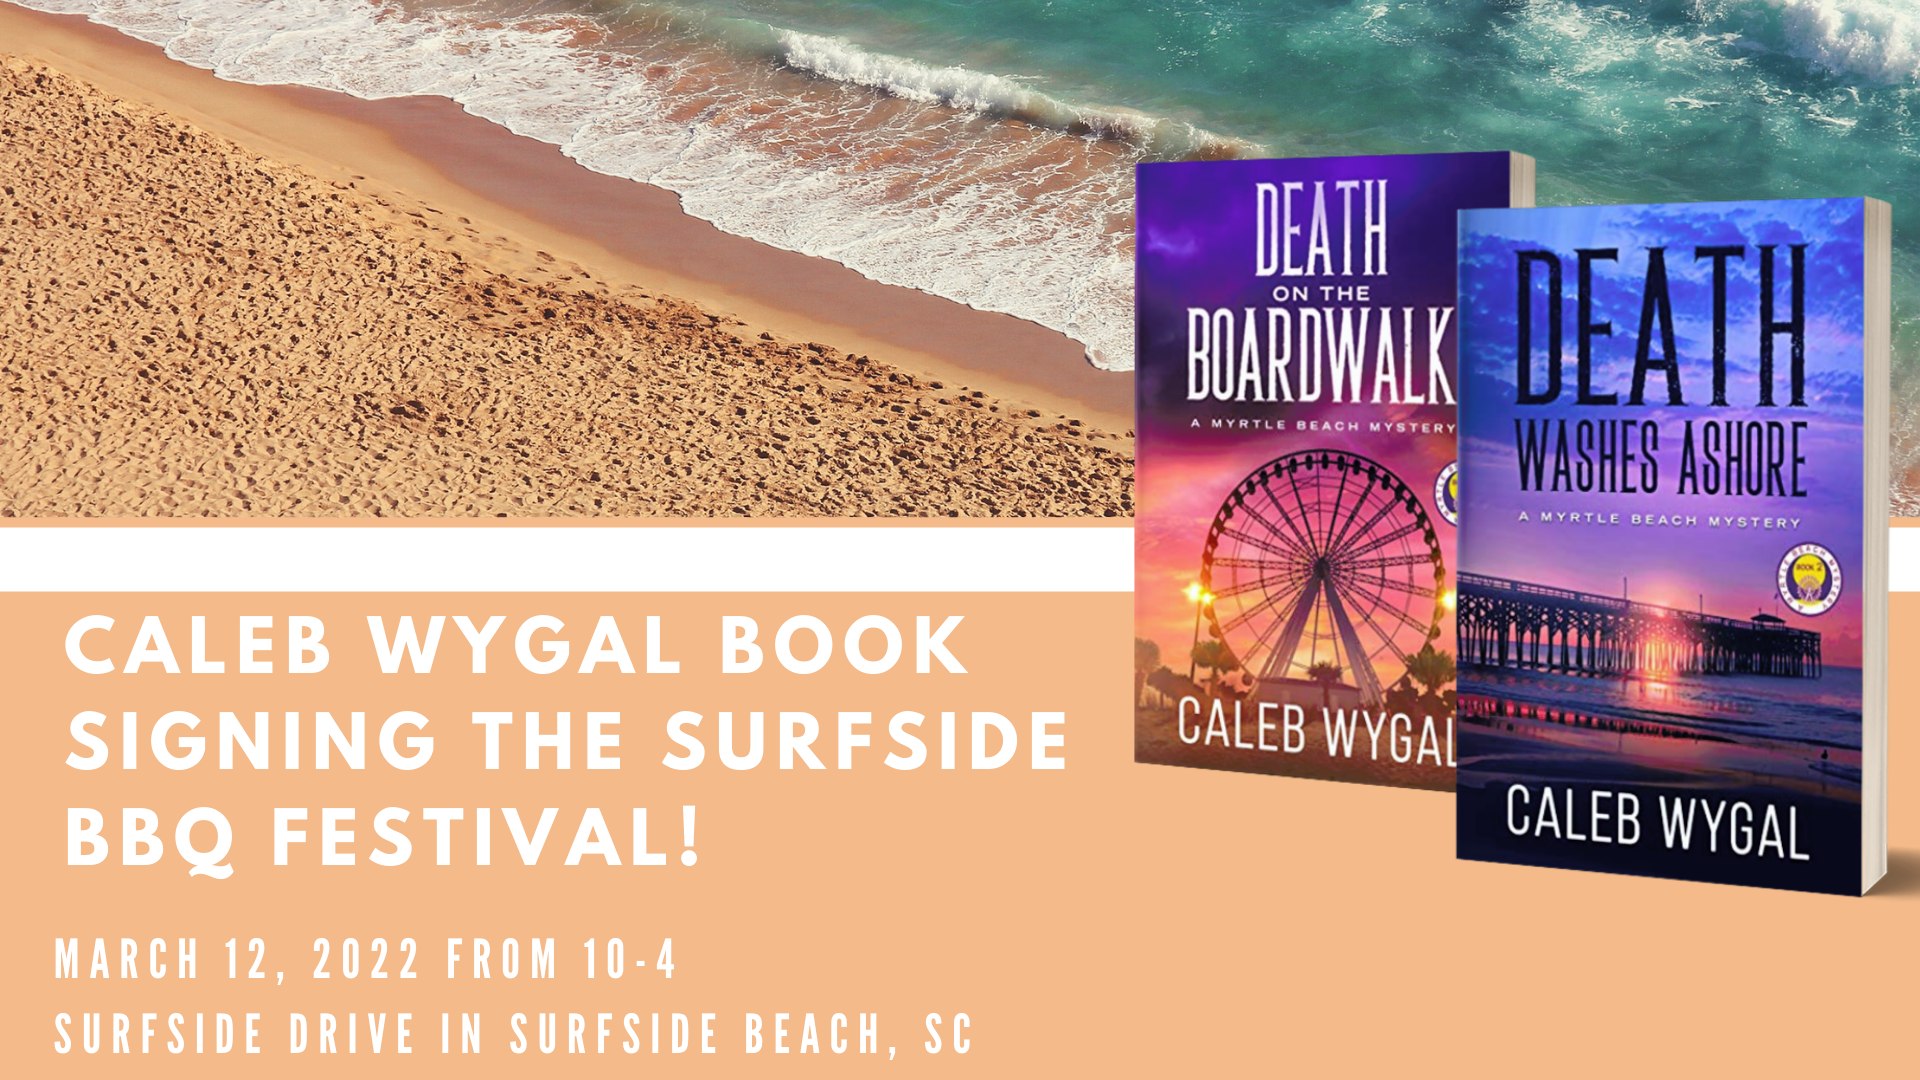 Caleb Wygal Book Signing at the Surfside BBQ Festival Caleb Wygal